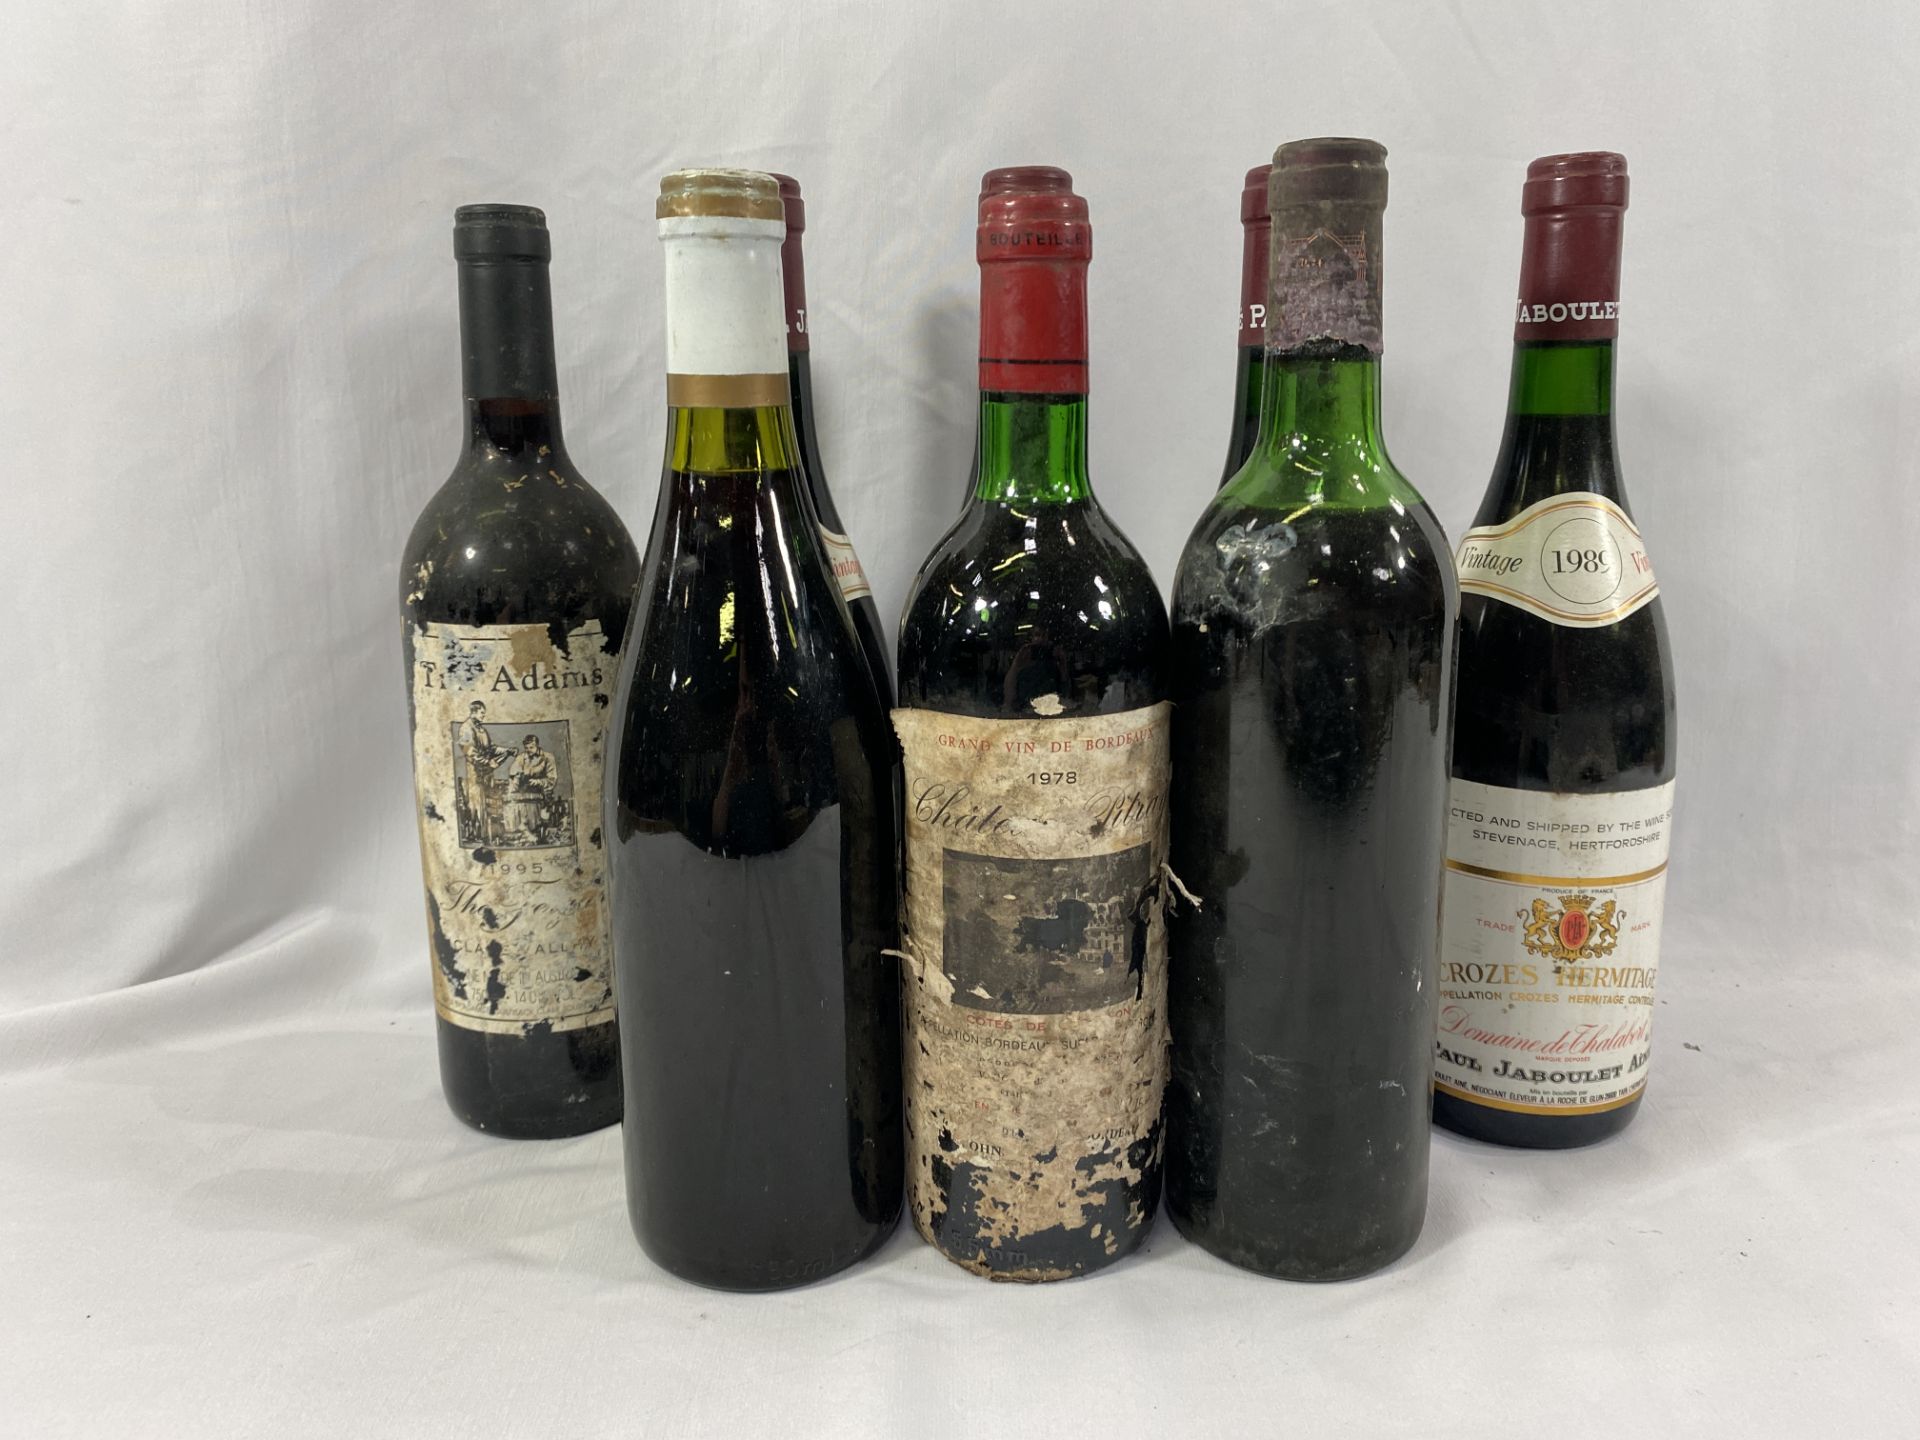 Four bottles 1989 Paul Jaboulet Aine Crozes Hermitage Domaine de Thalabert and four other bottles